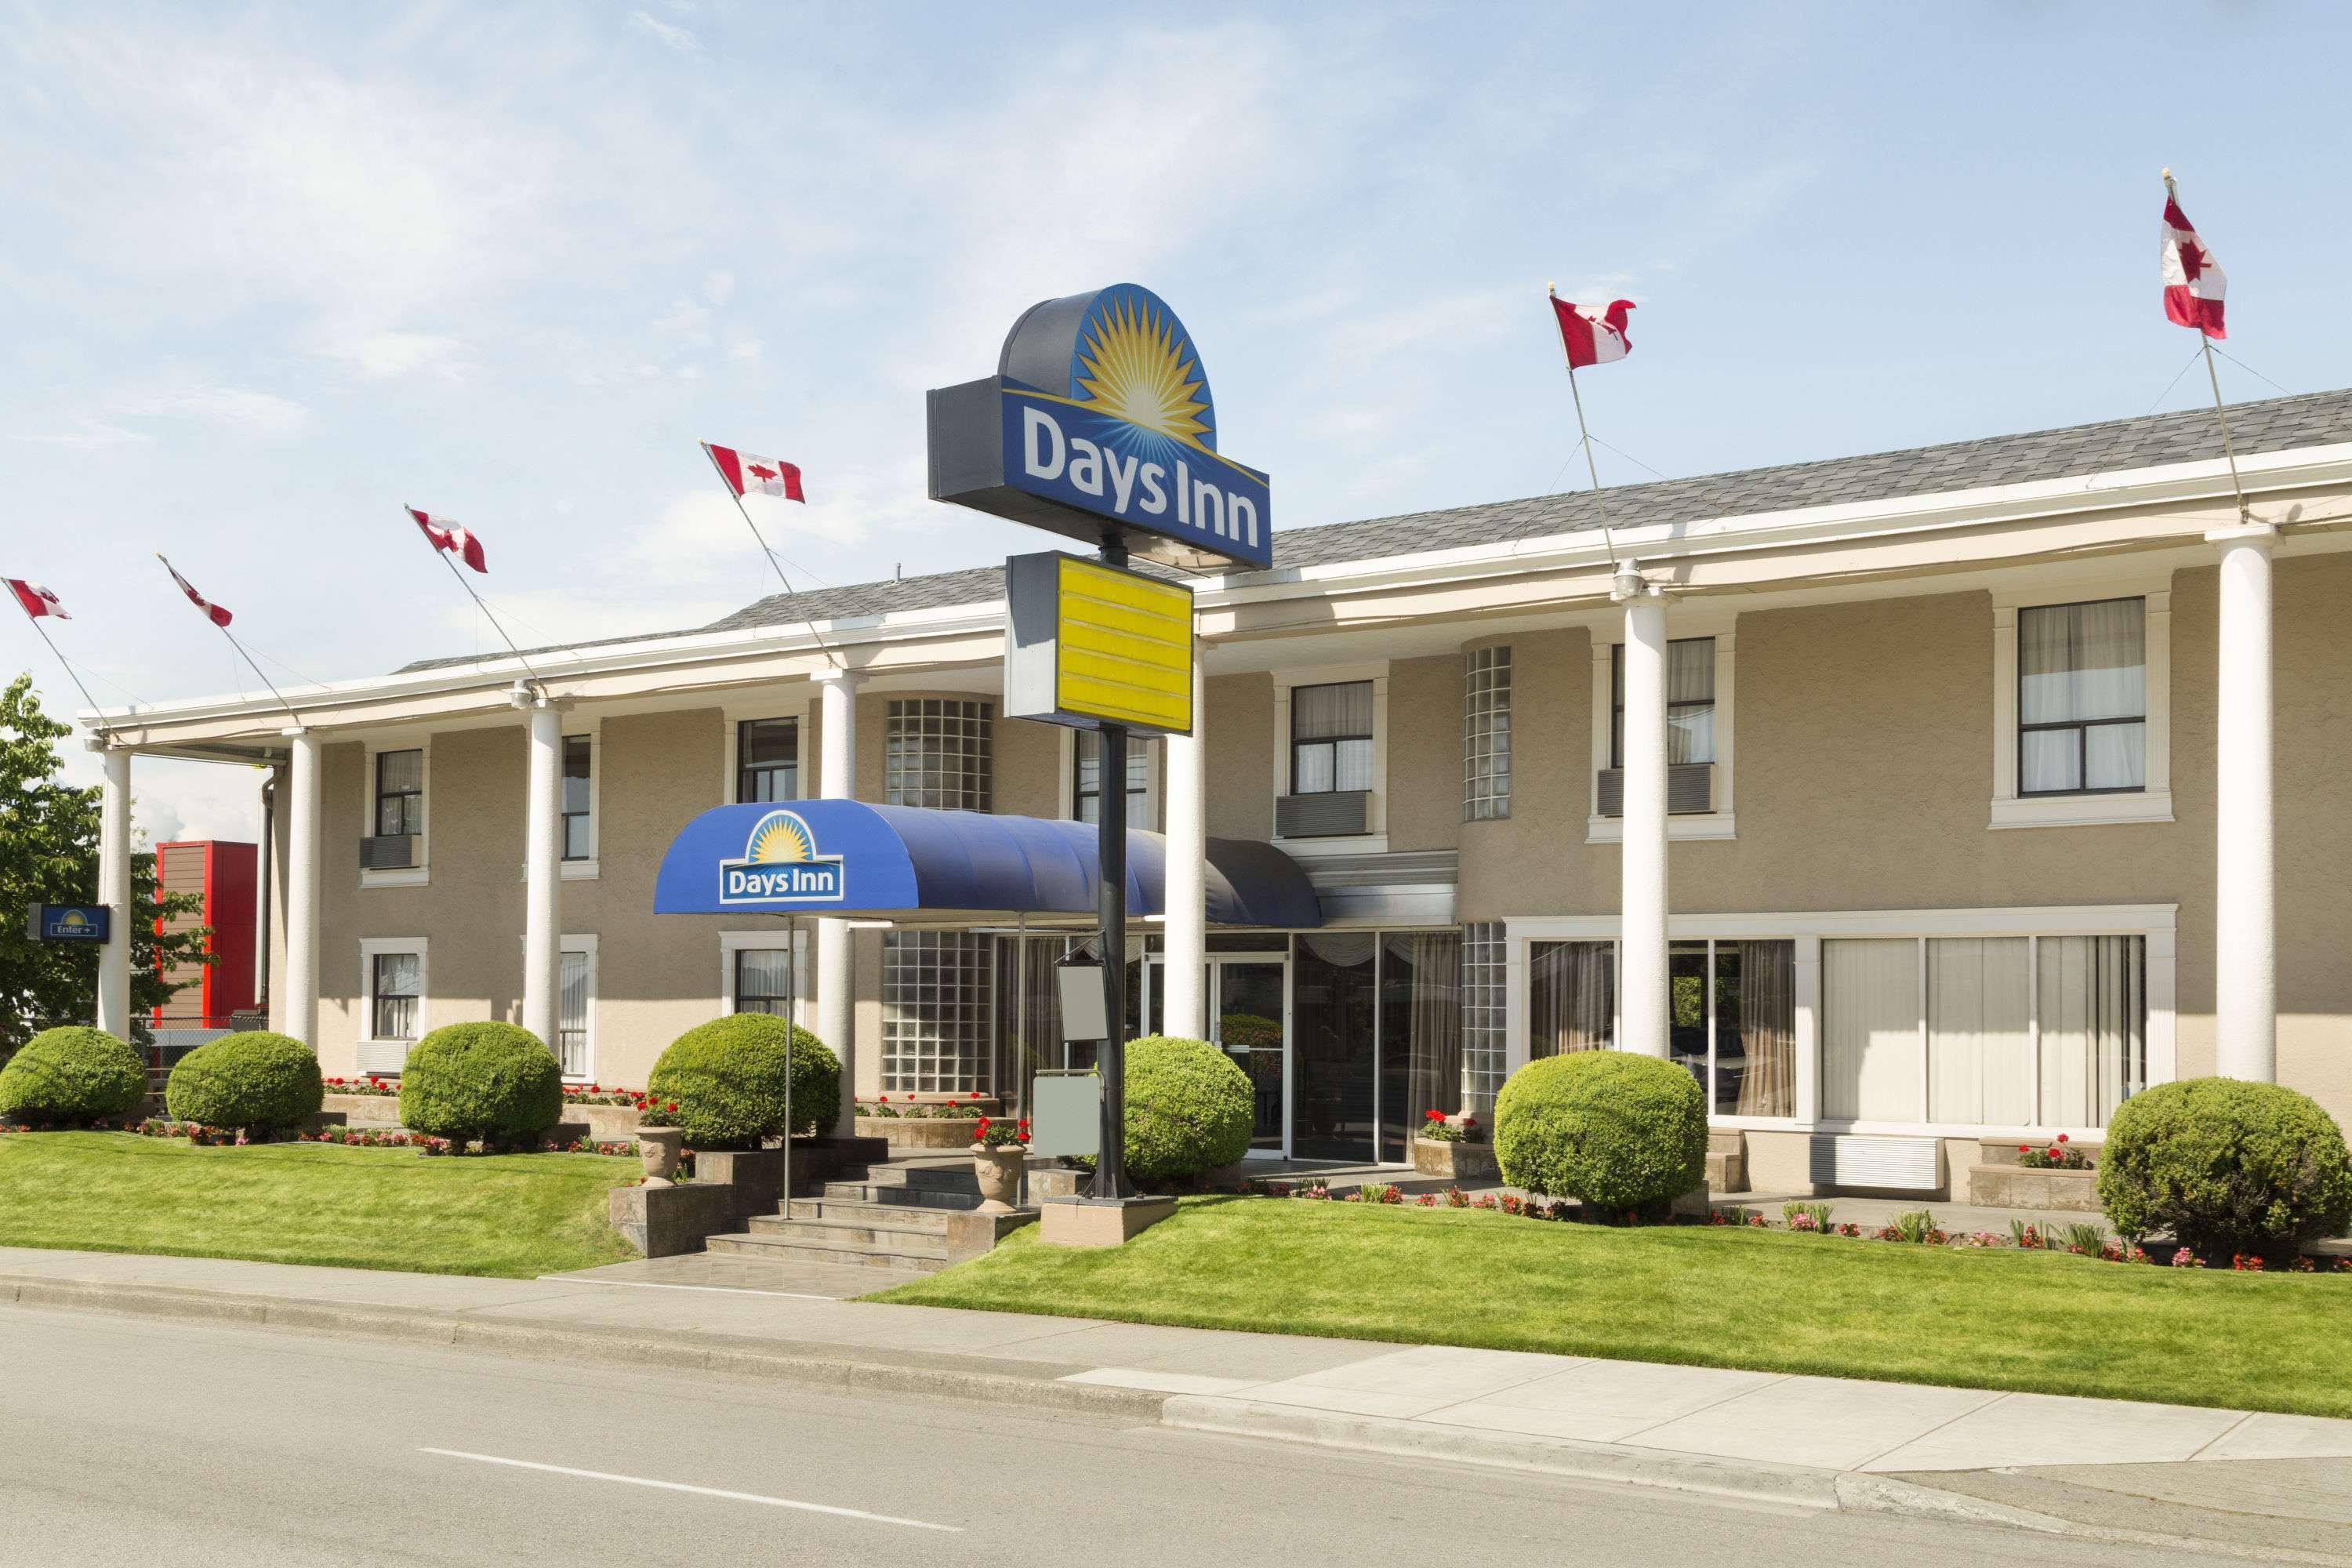 Hotel Days Inn Vancouver Metro